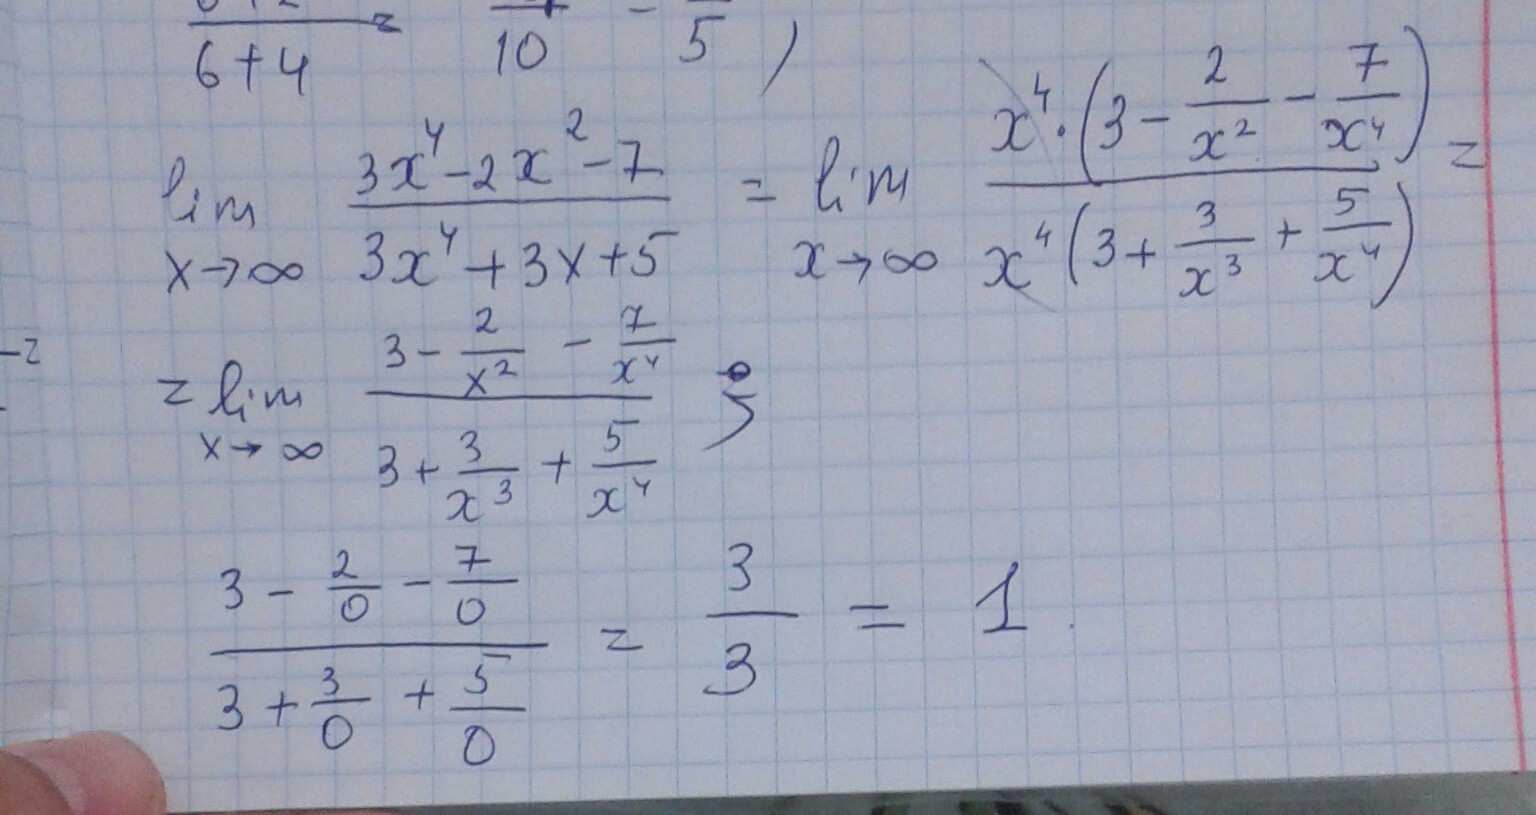 7x 1 13. Lim x стремится к бесконечности 2/x 2+3x. Lim x стремится к бесконечности x^2-4x+3/x+5. Lim x стремиться к бесконечности ( 2x/2x-3)^3x. Lim x стремится к бесконечности 3+x-5x4.